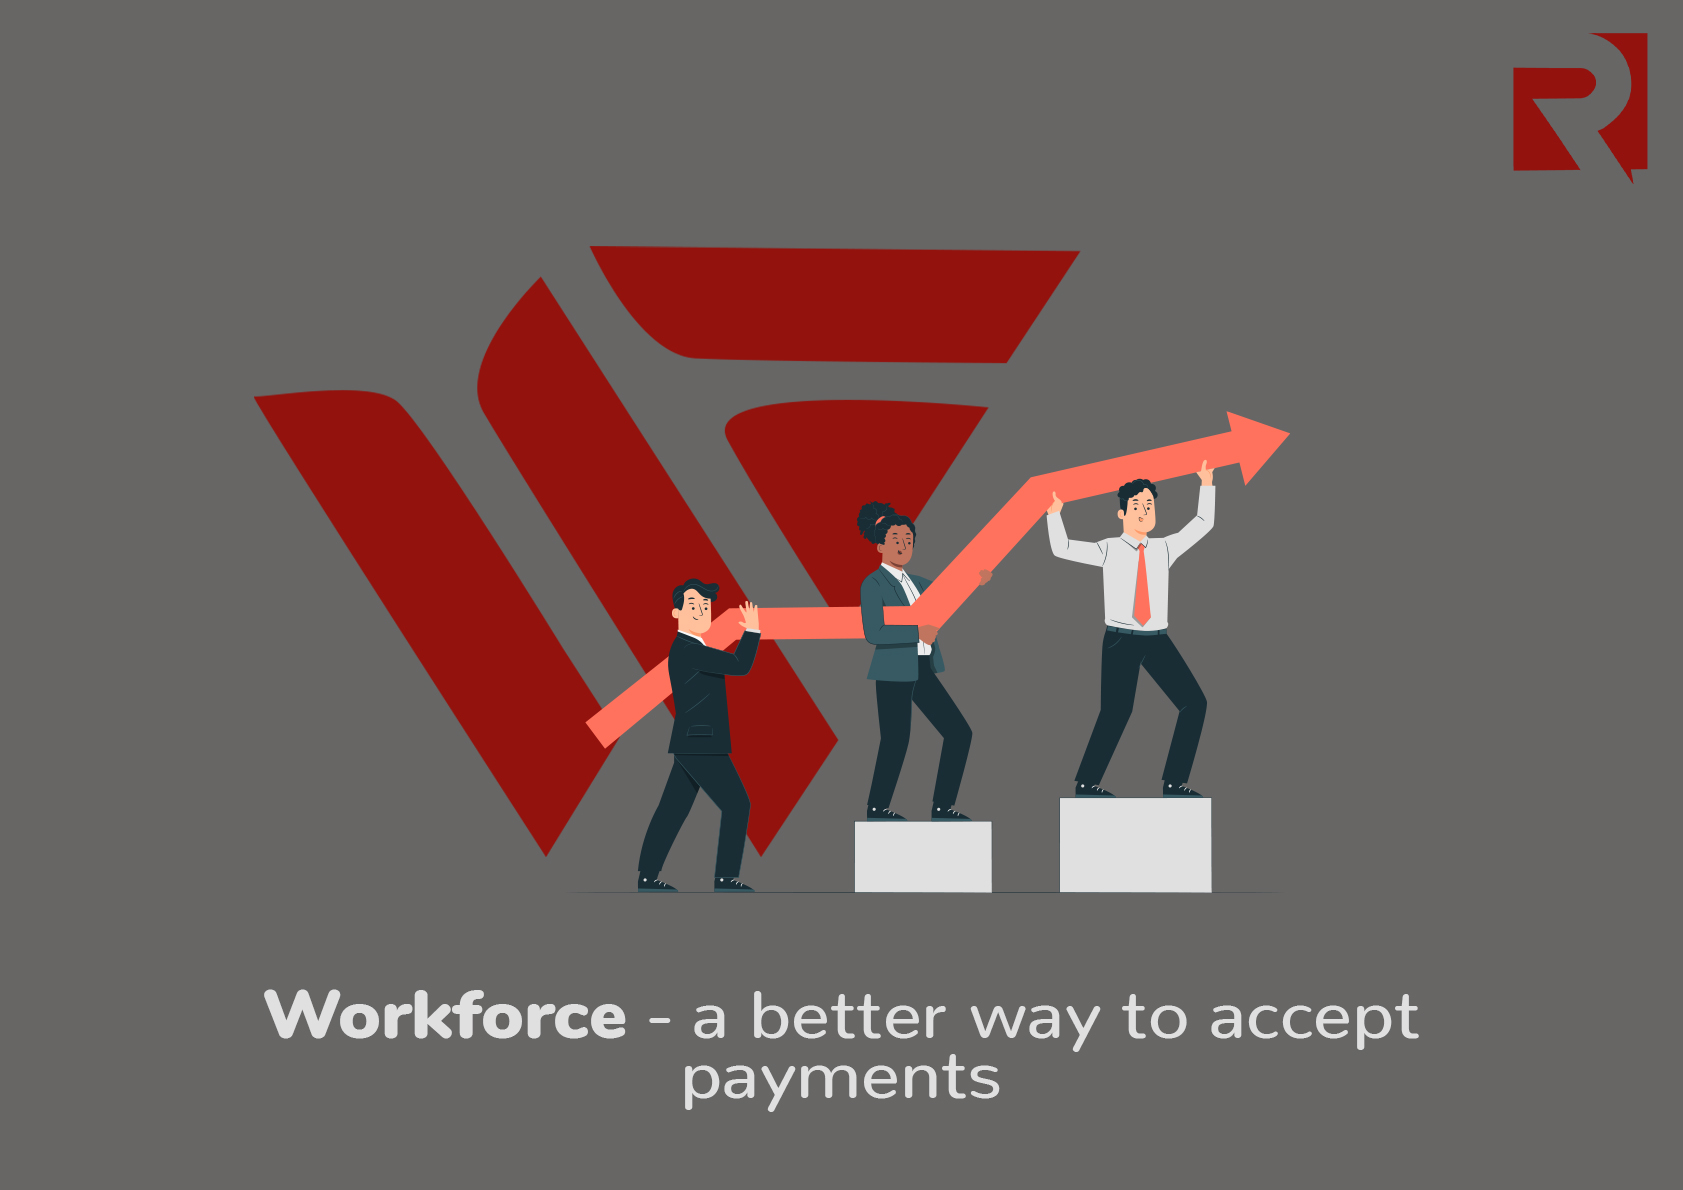 Redbiller's Workforce -a better way to accept payments